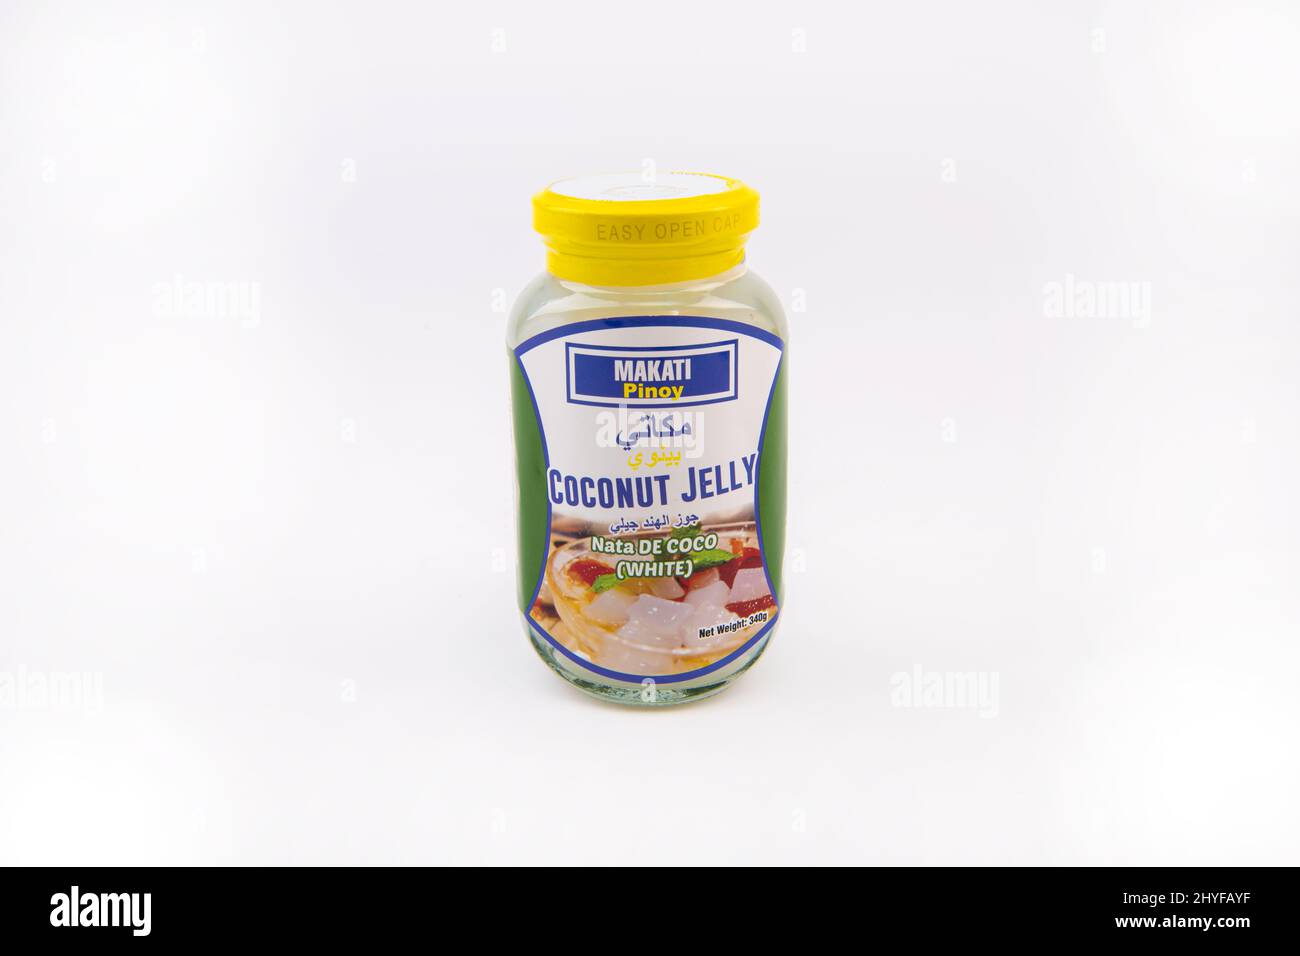 Makati pinoy gelatina di cocco 340 g su sfondo bianco Foto Stock